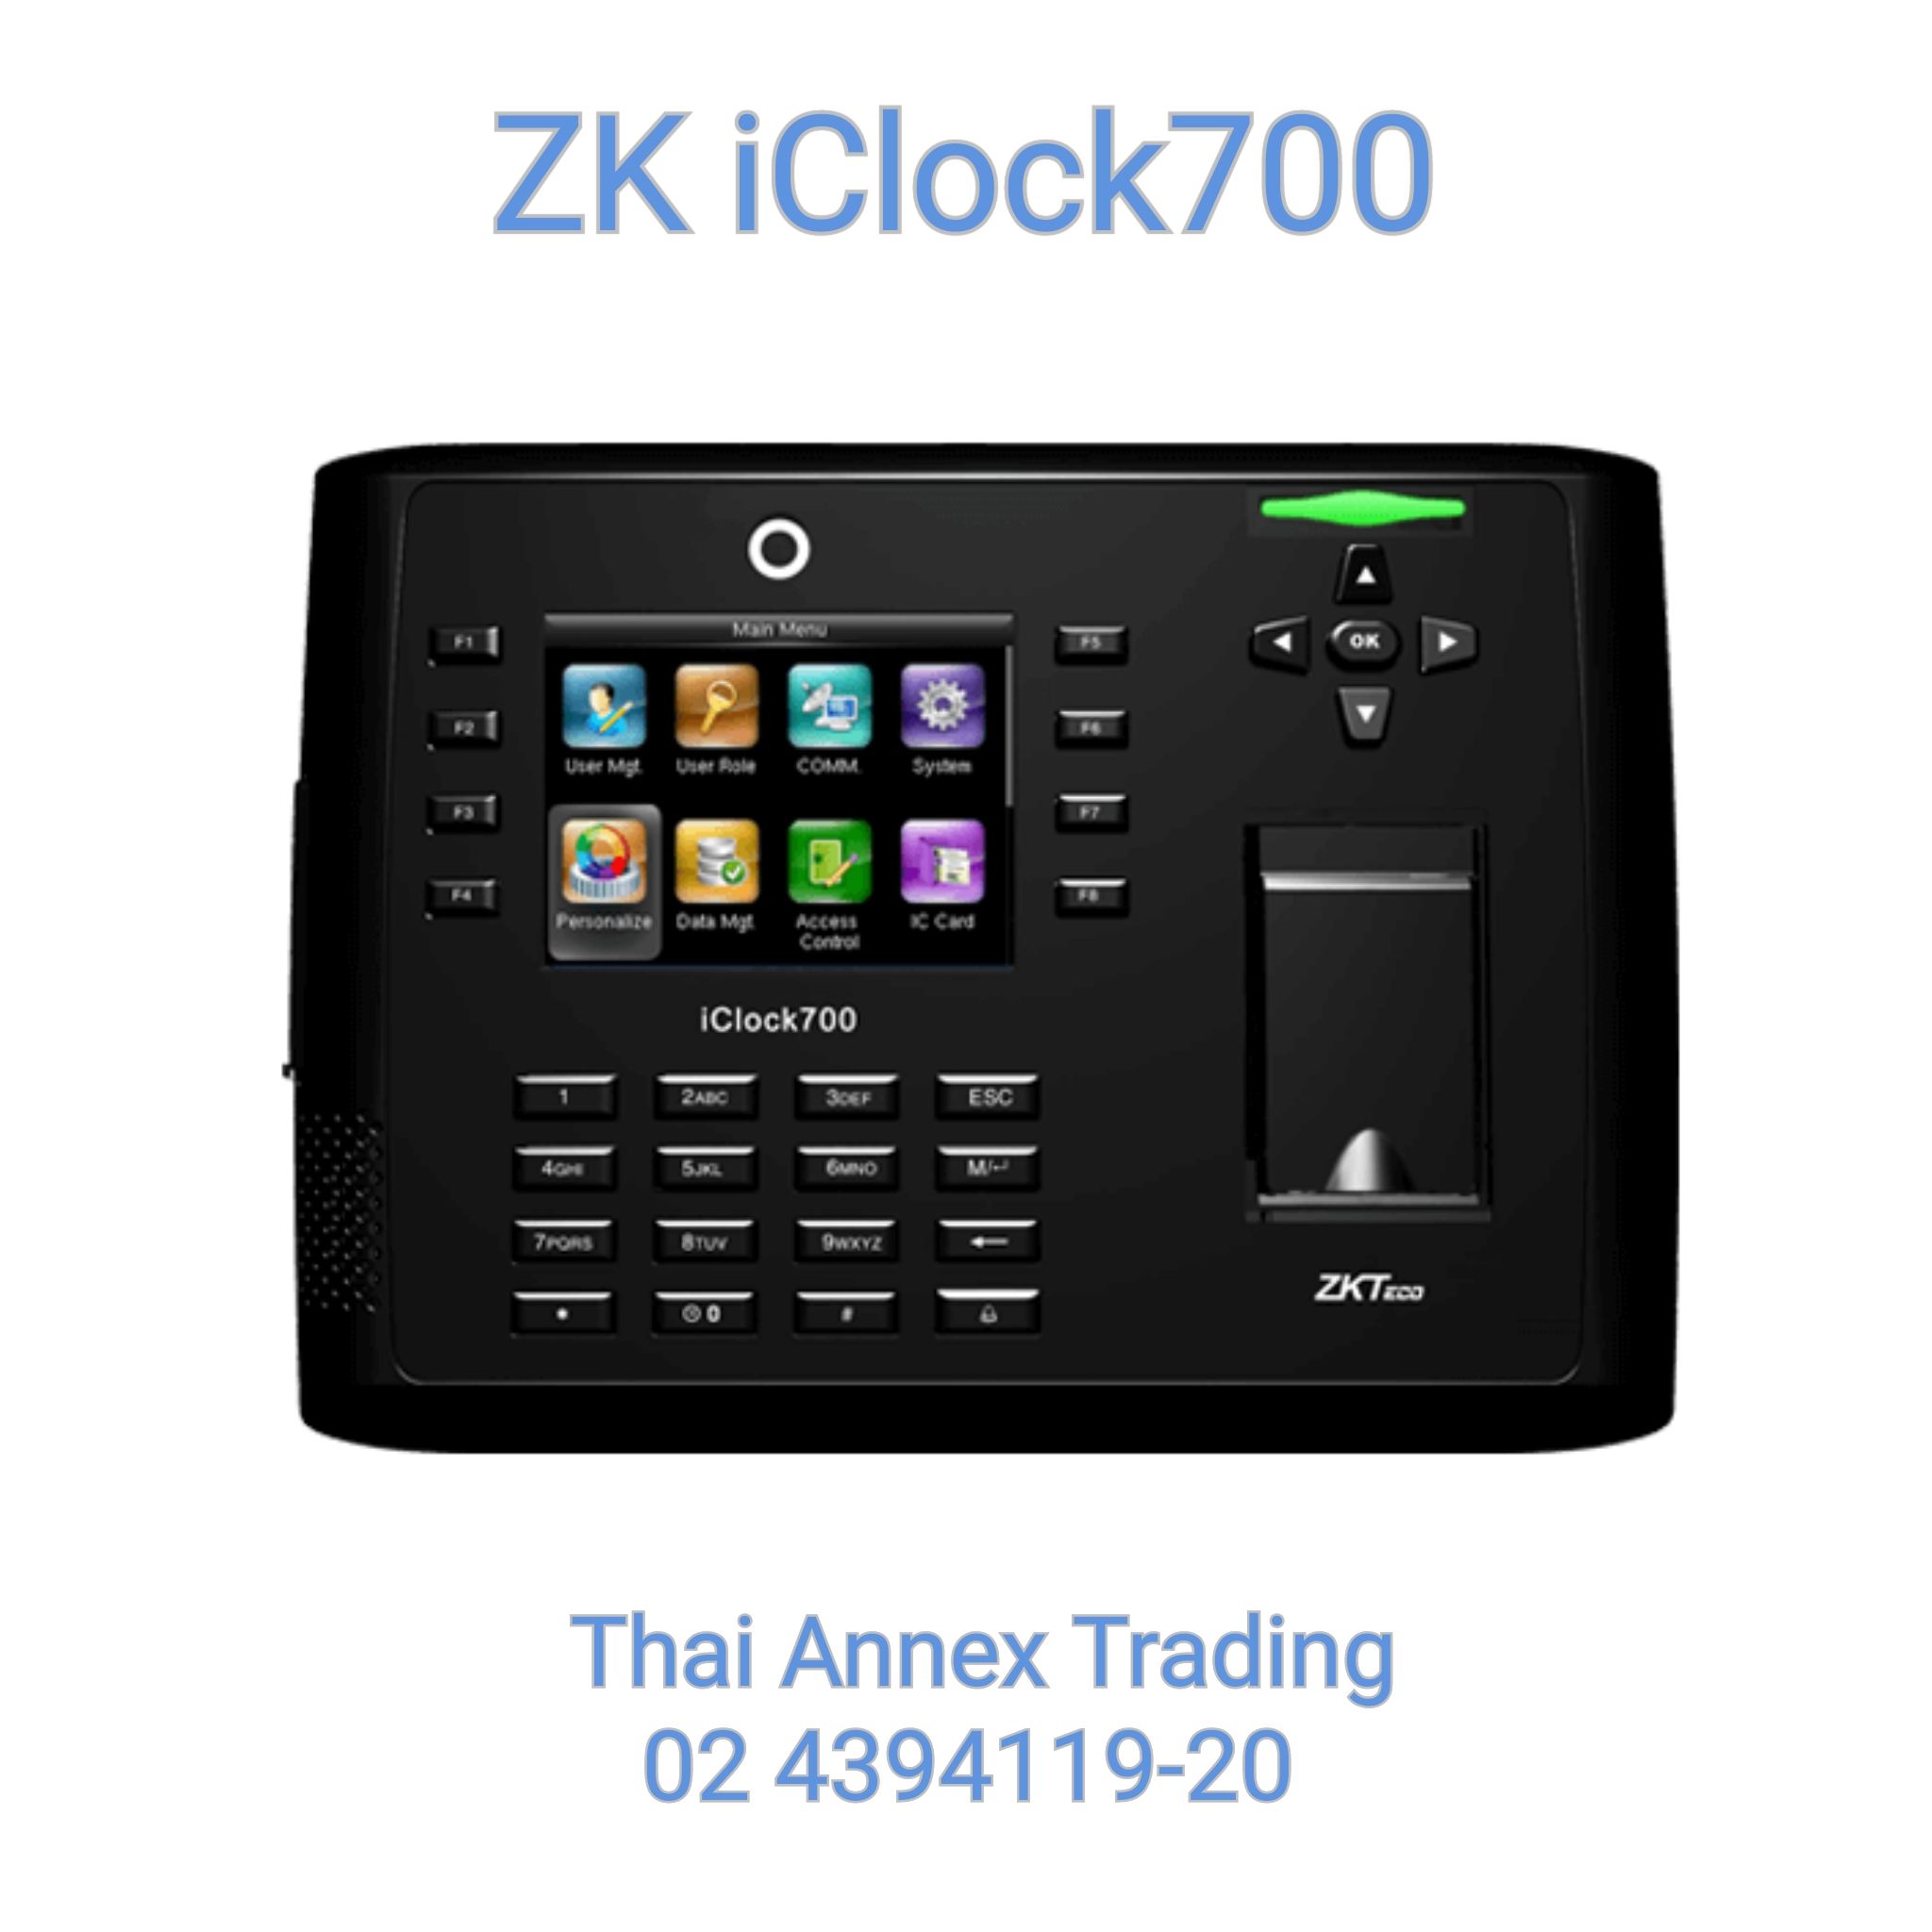 ZK iClock700